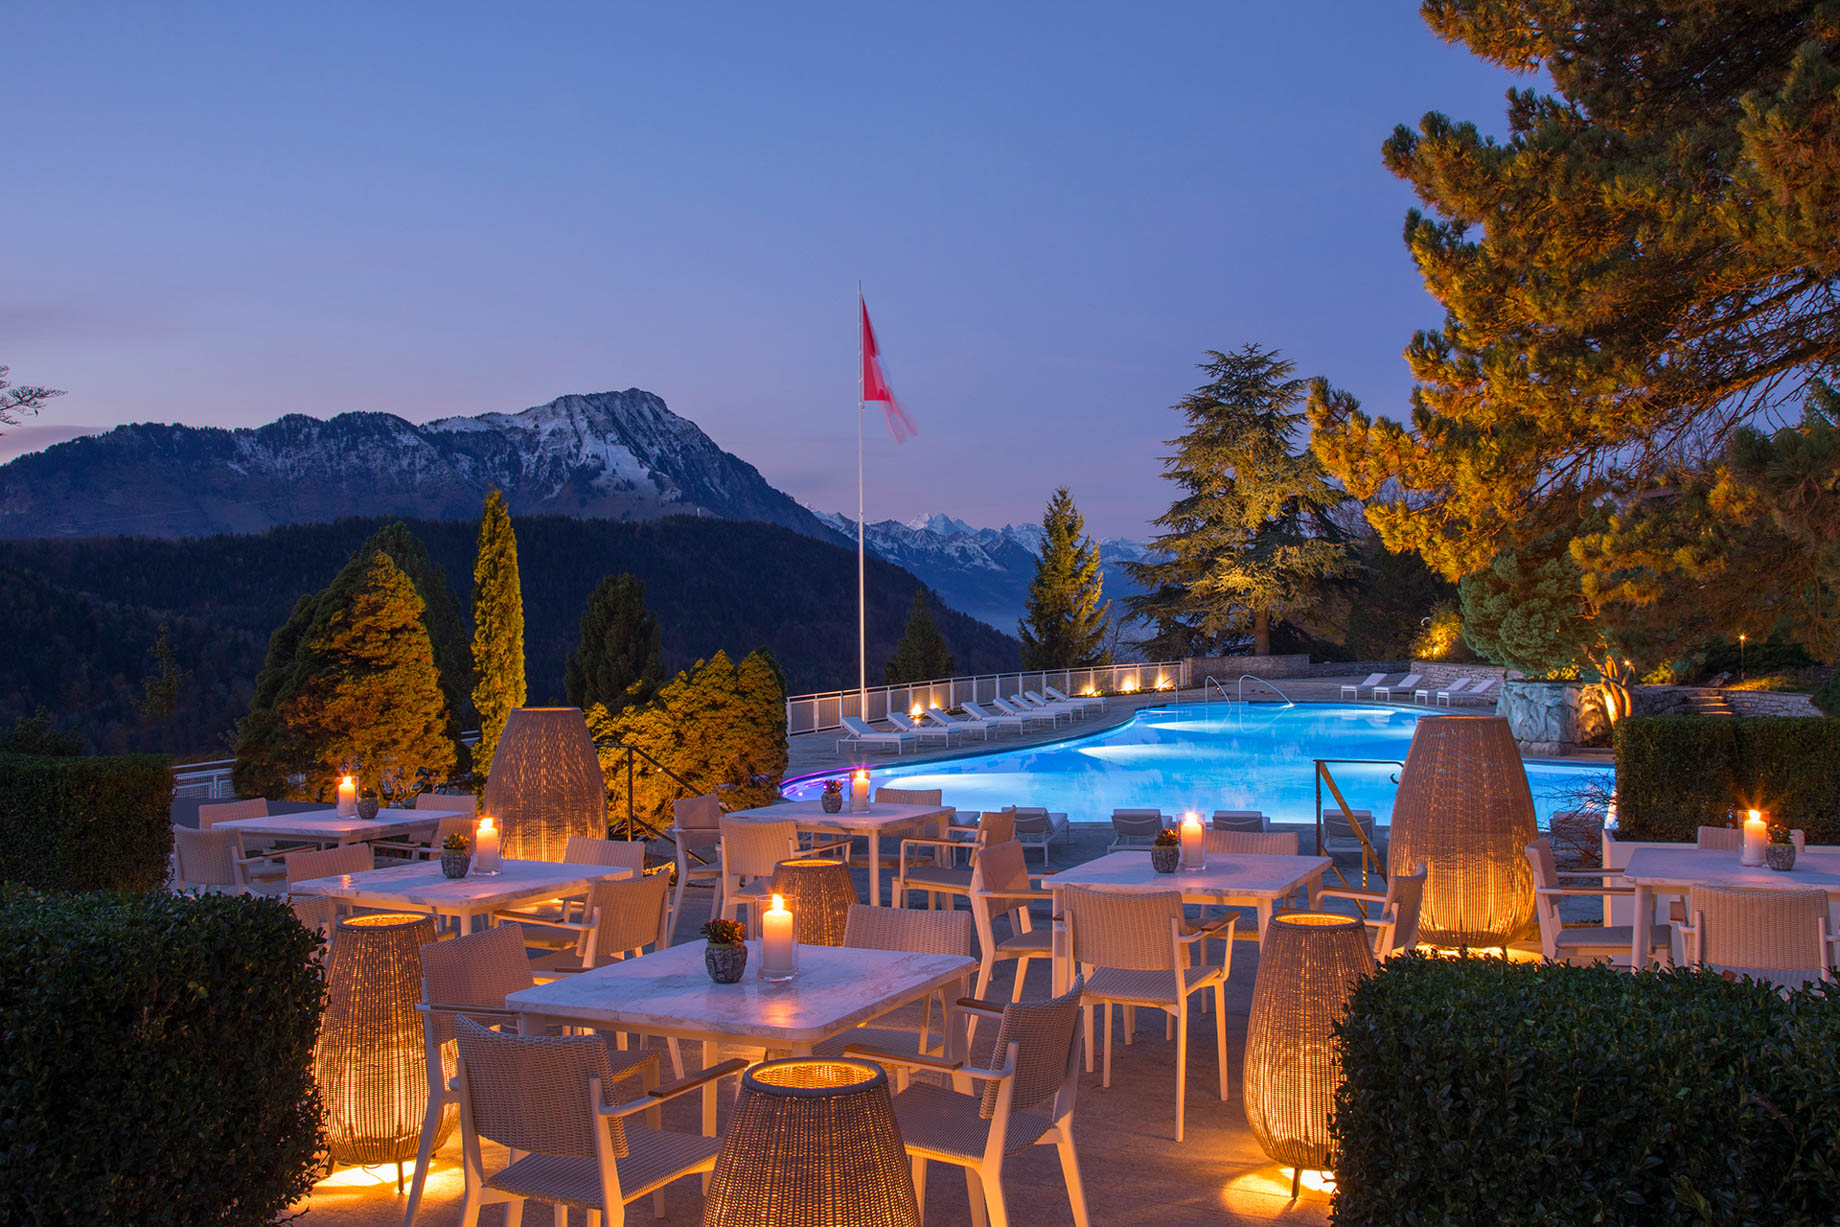 Burgenstock Hotel & Alpine Spa – Obburgen, Switzerland – Pool Deck Tables